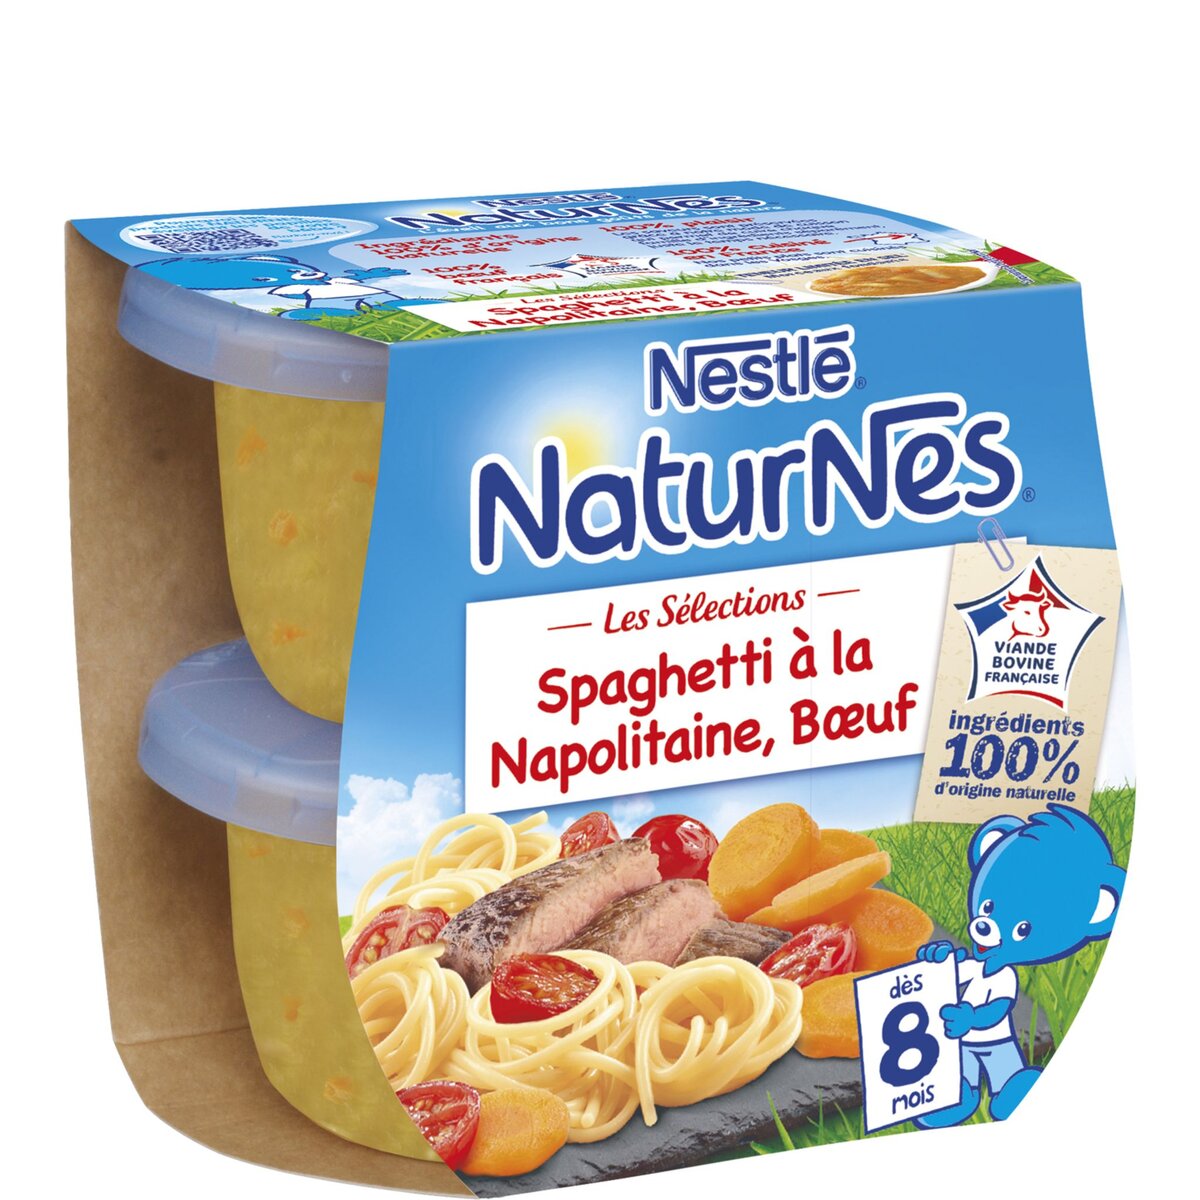 NATURNES Naturnes spaghettis à la napolitaine boeuf 2x200g dès8mois